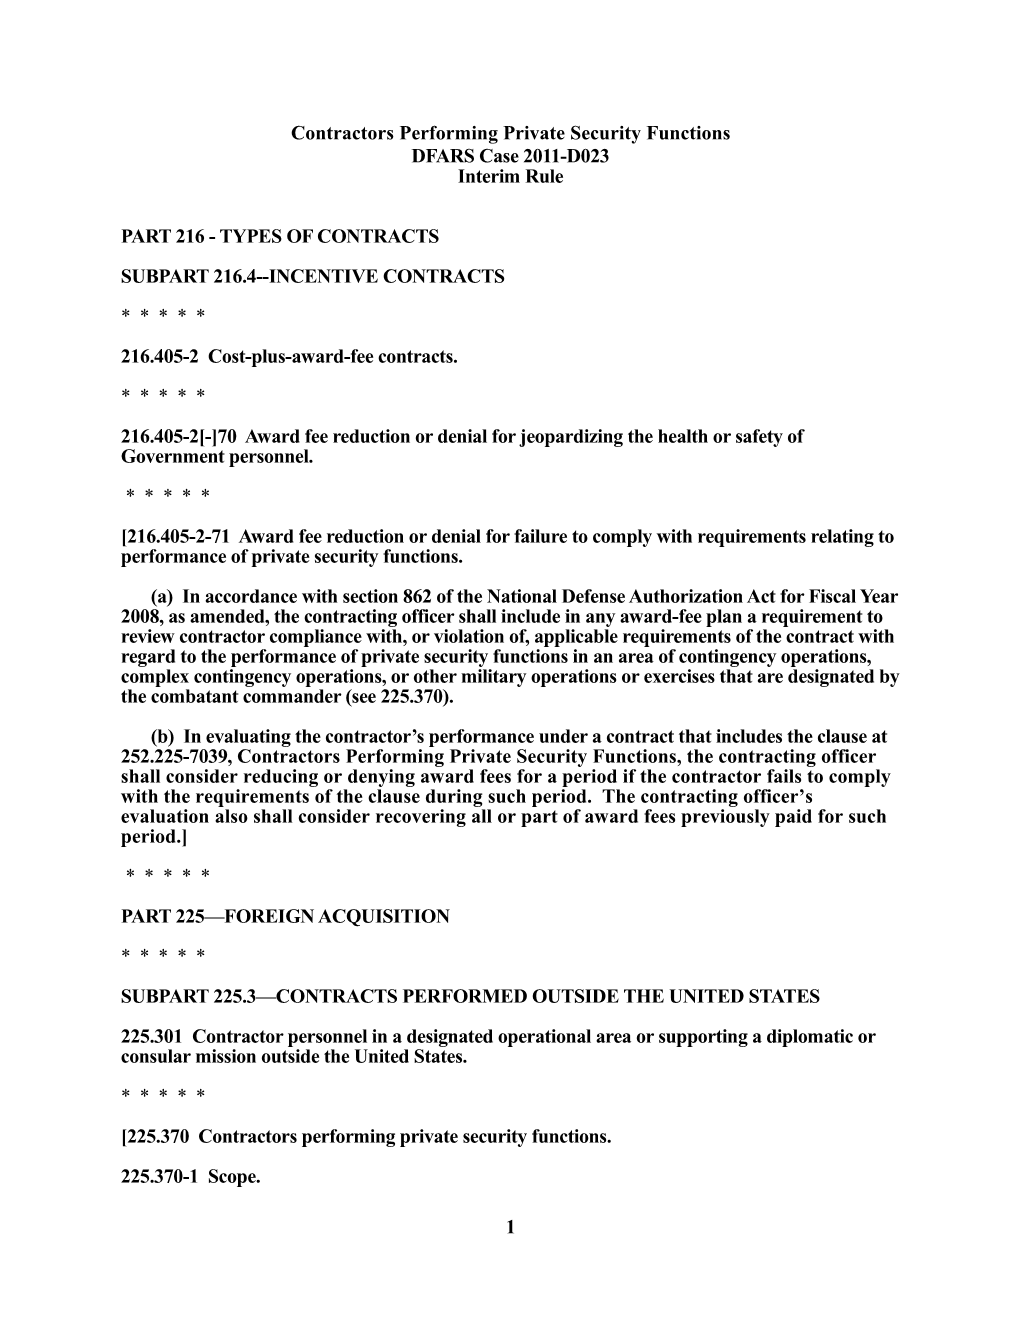 Attention: This Is a Pre-Decisional Defense Acquisition Regulations Council (Darc) Document